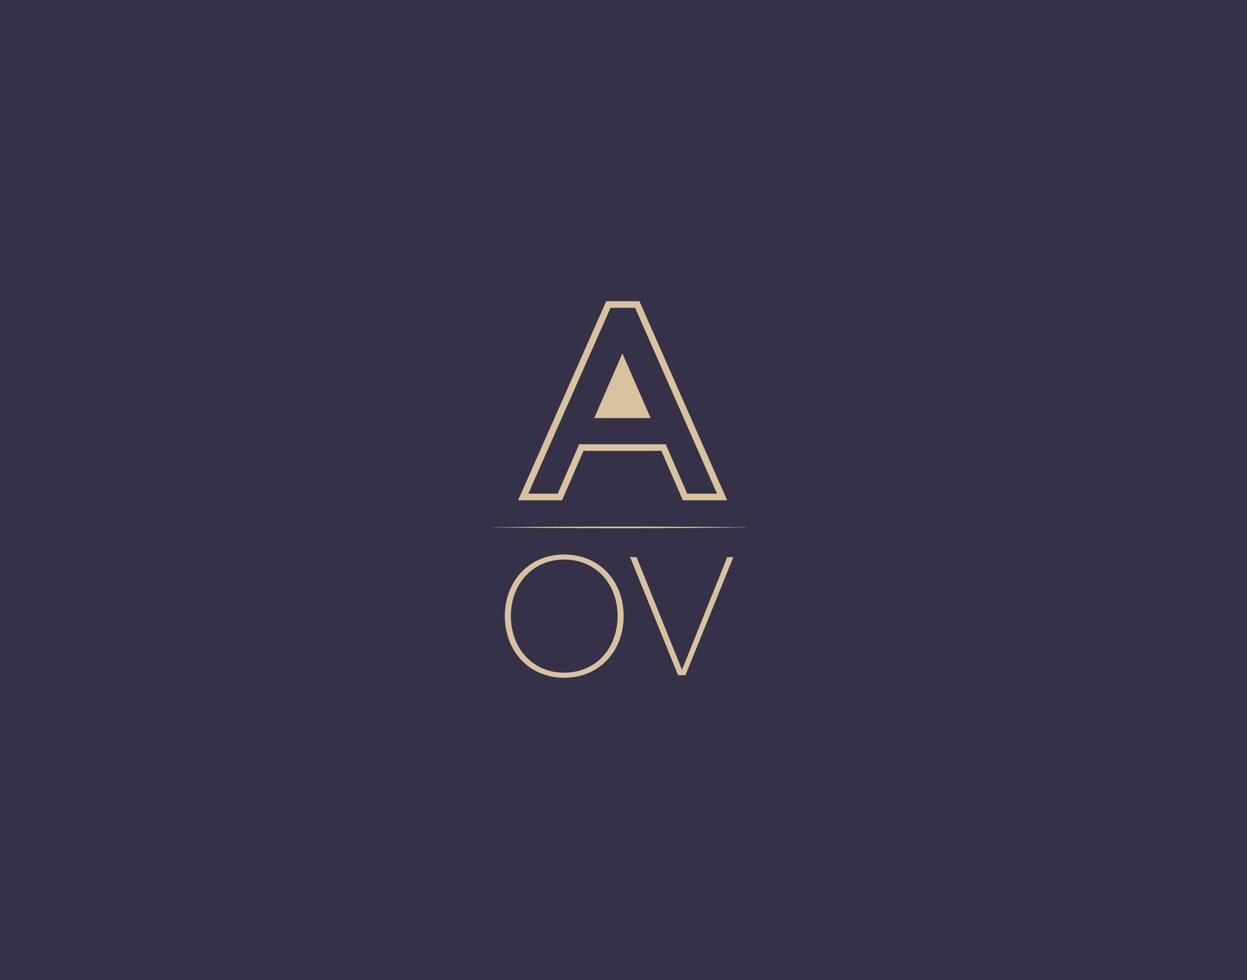 aov brev logotyp design modern minimalistisk vektor bilder